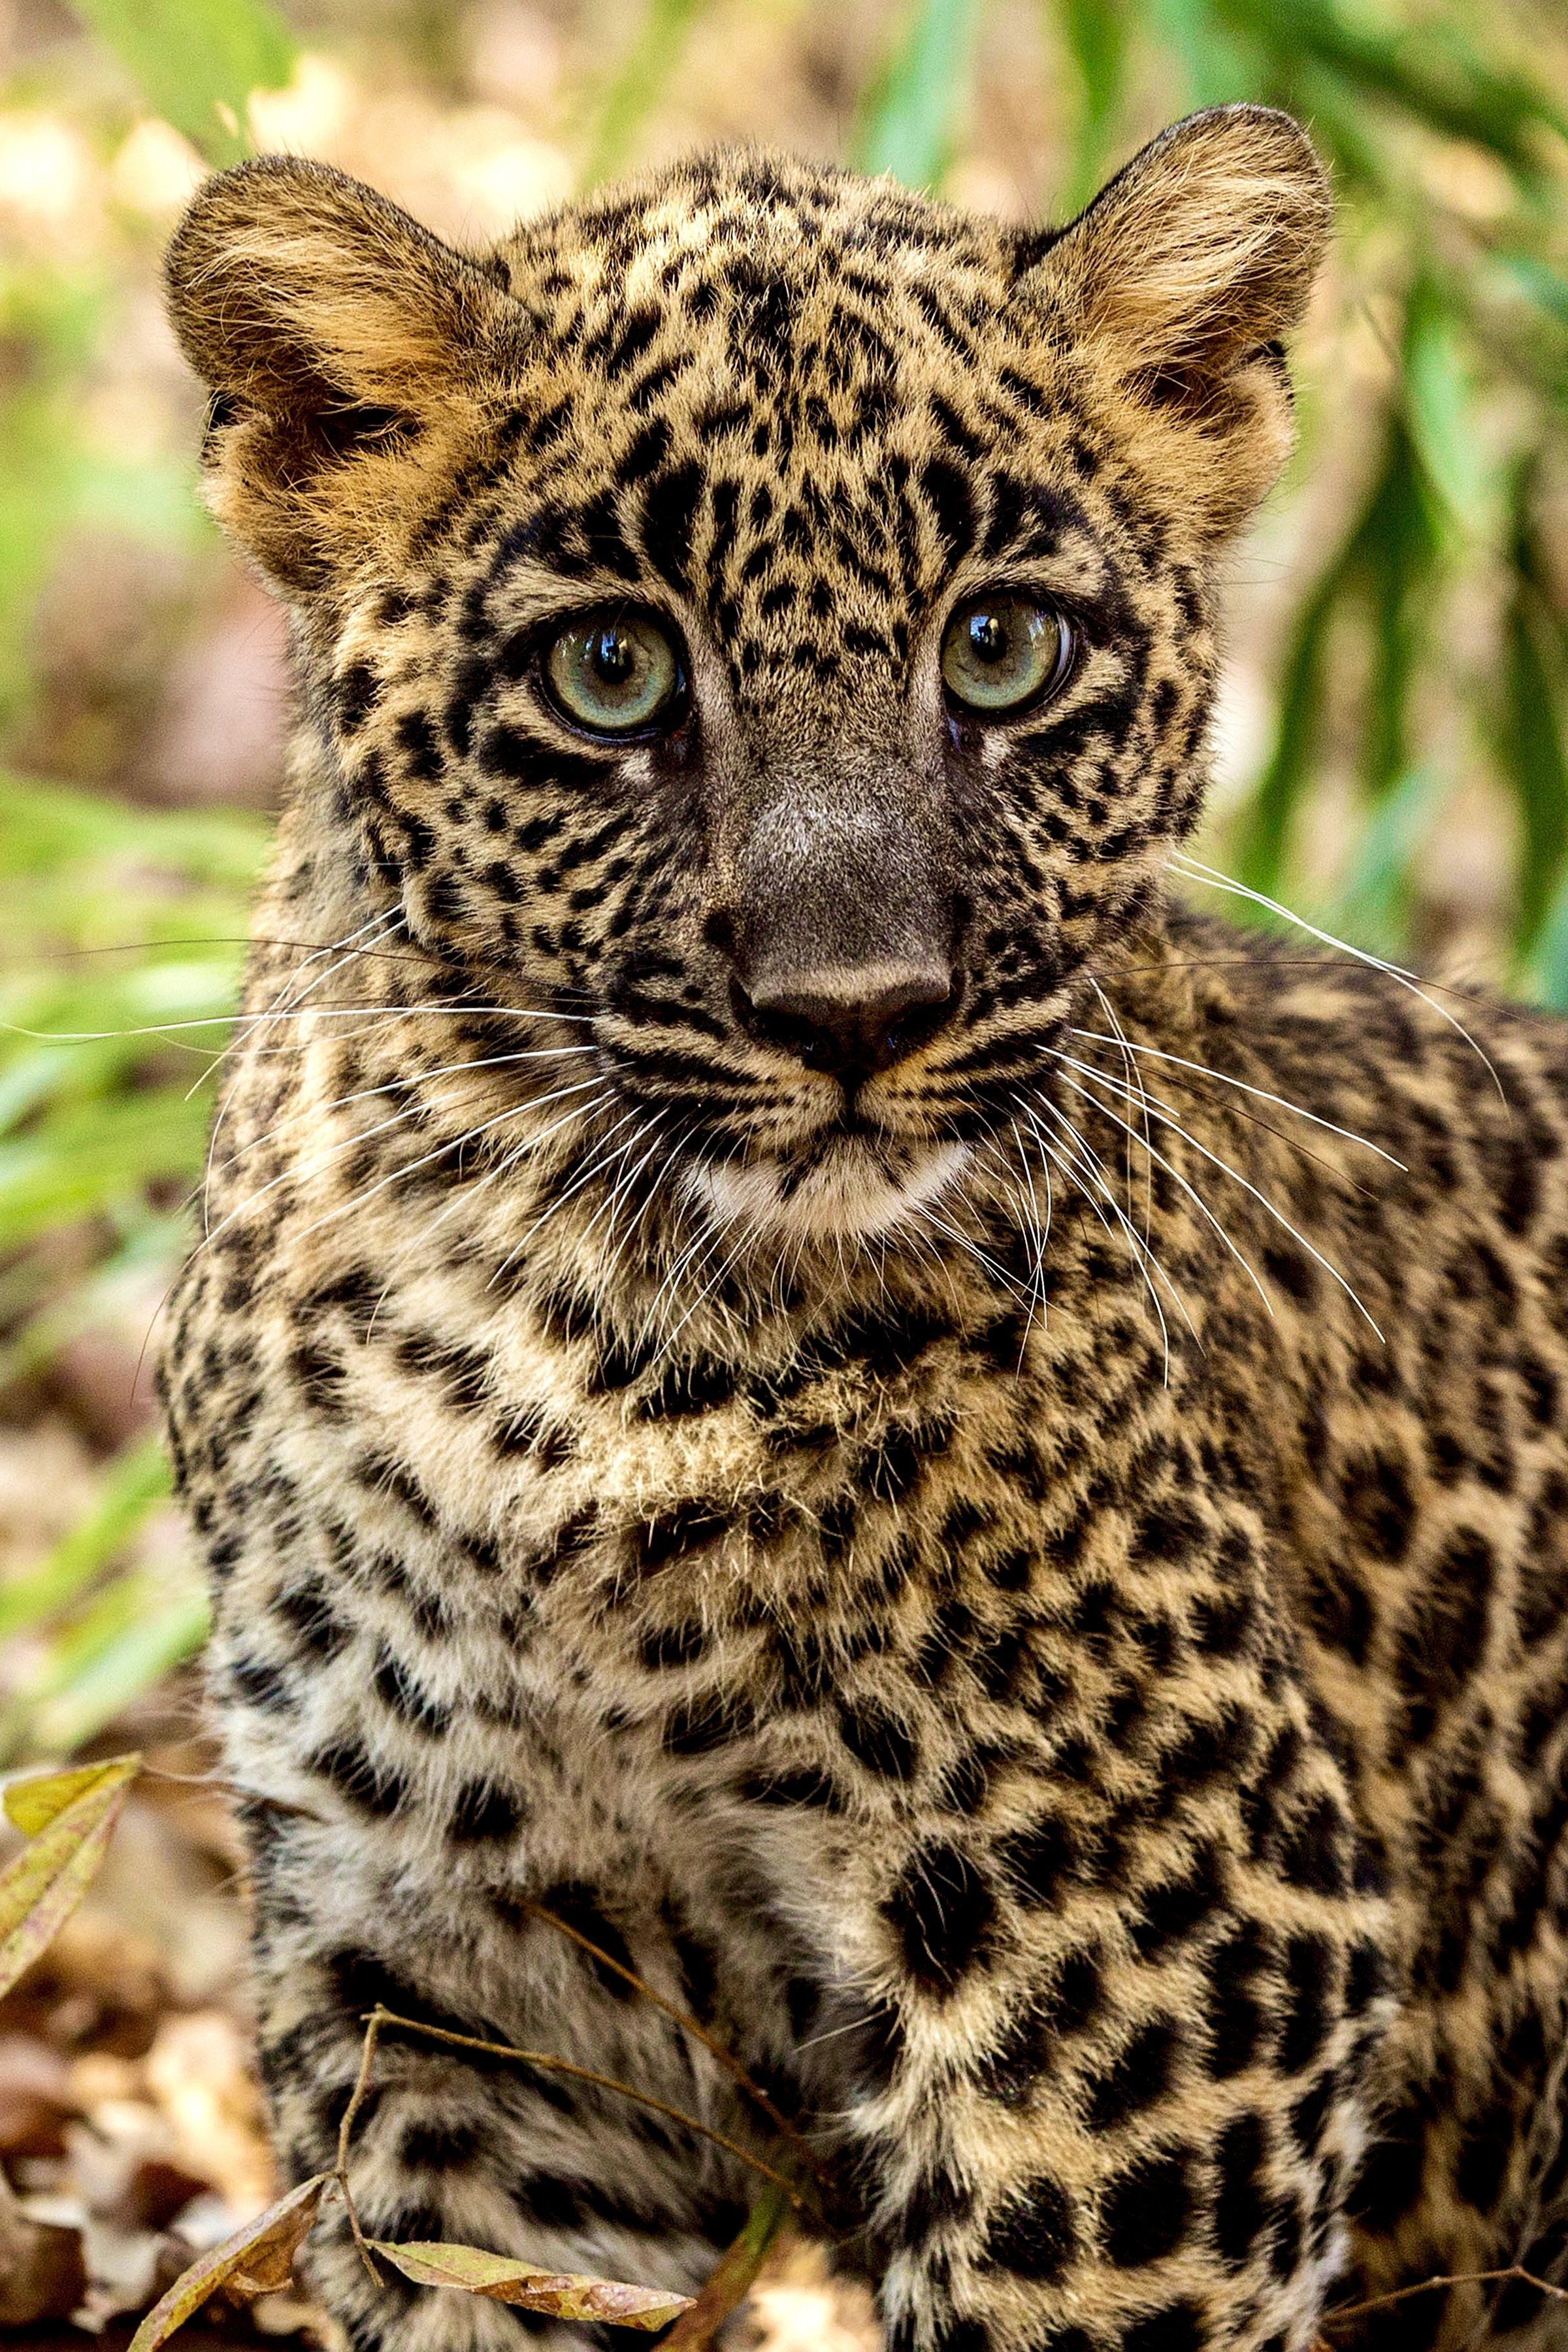 #leopard #wild #cub #baby #wildlife #nature, Dhananjay Jadhav